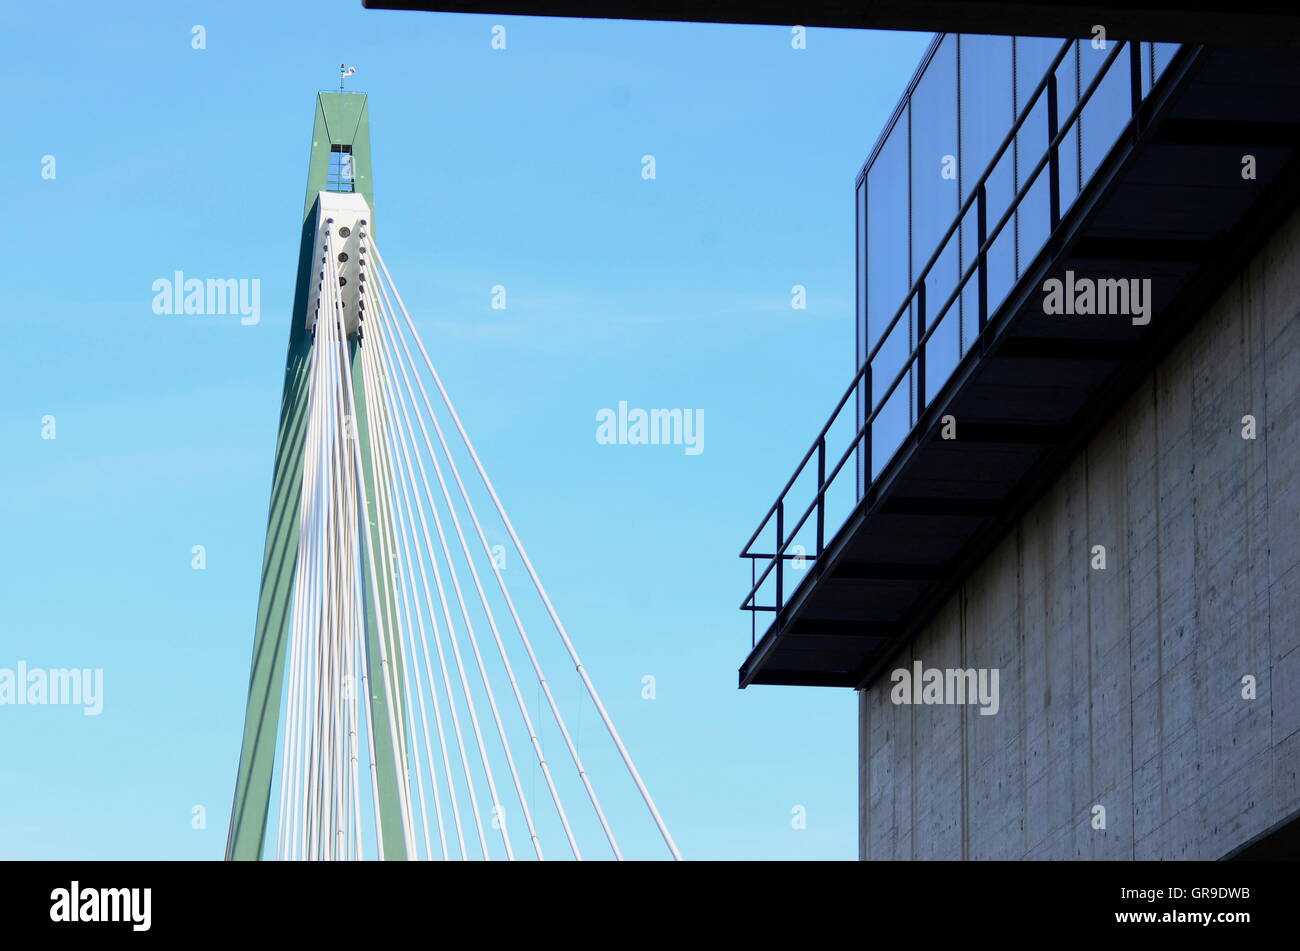 Donaustadtbrücke, Vienna Foto Stock